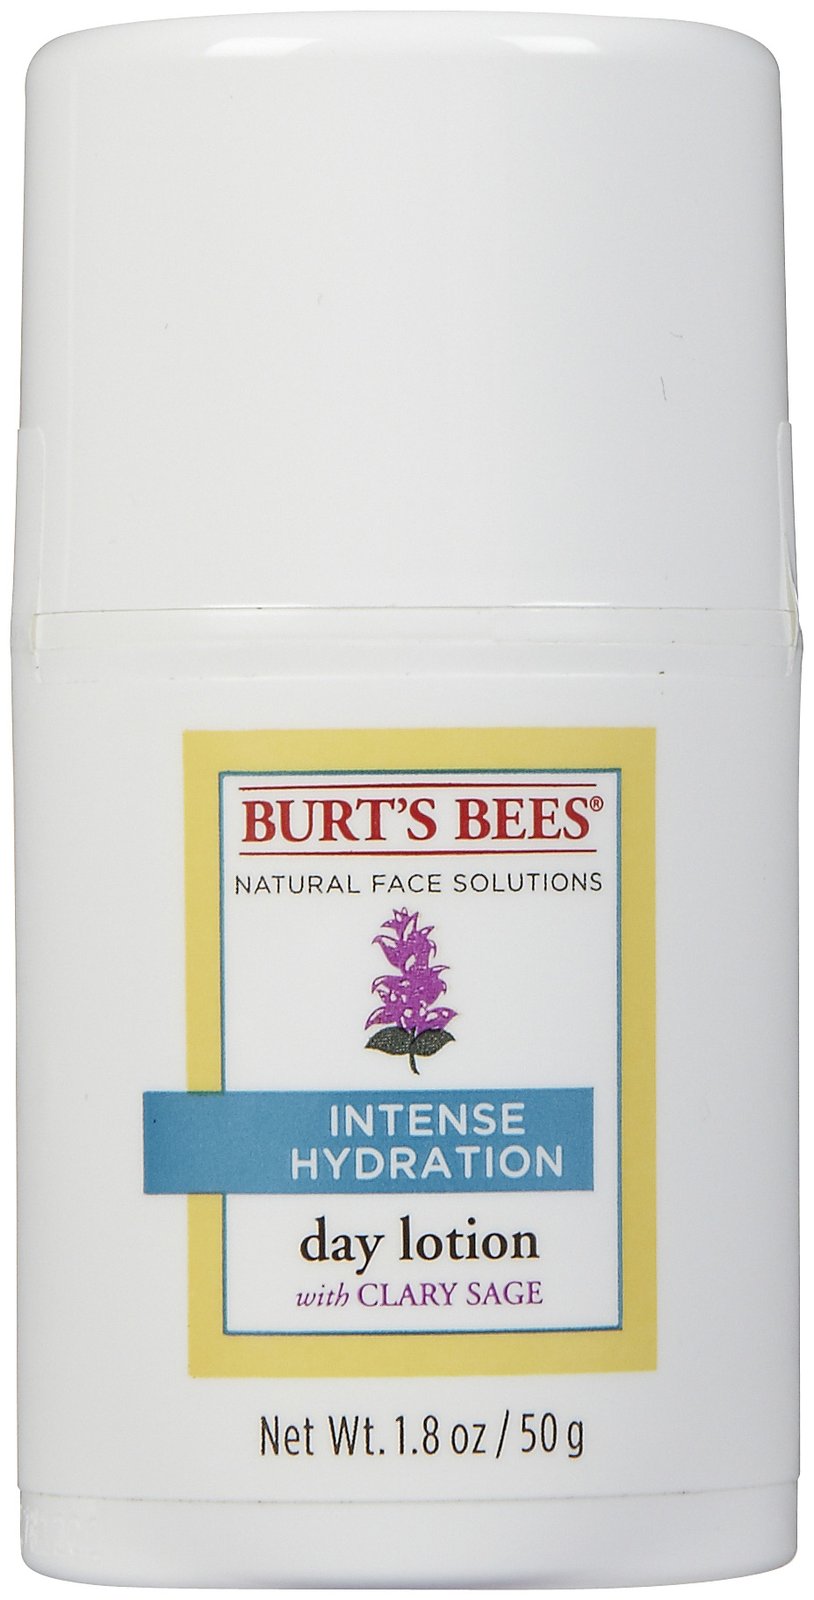 Burt's Bees Intense Hydration Day Lotion